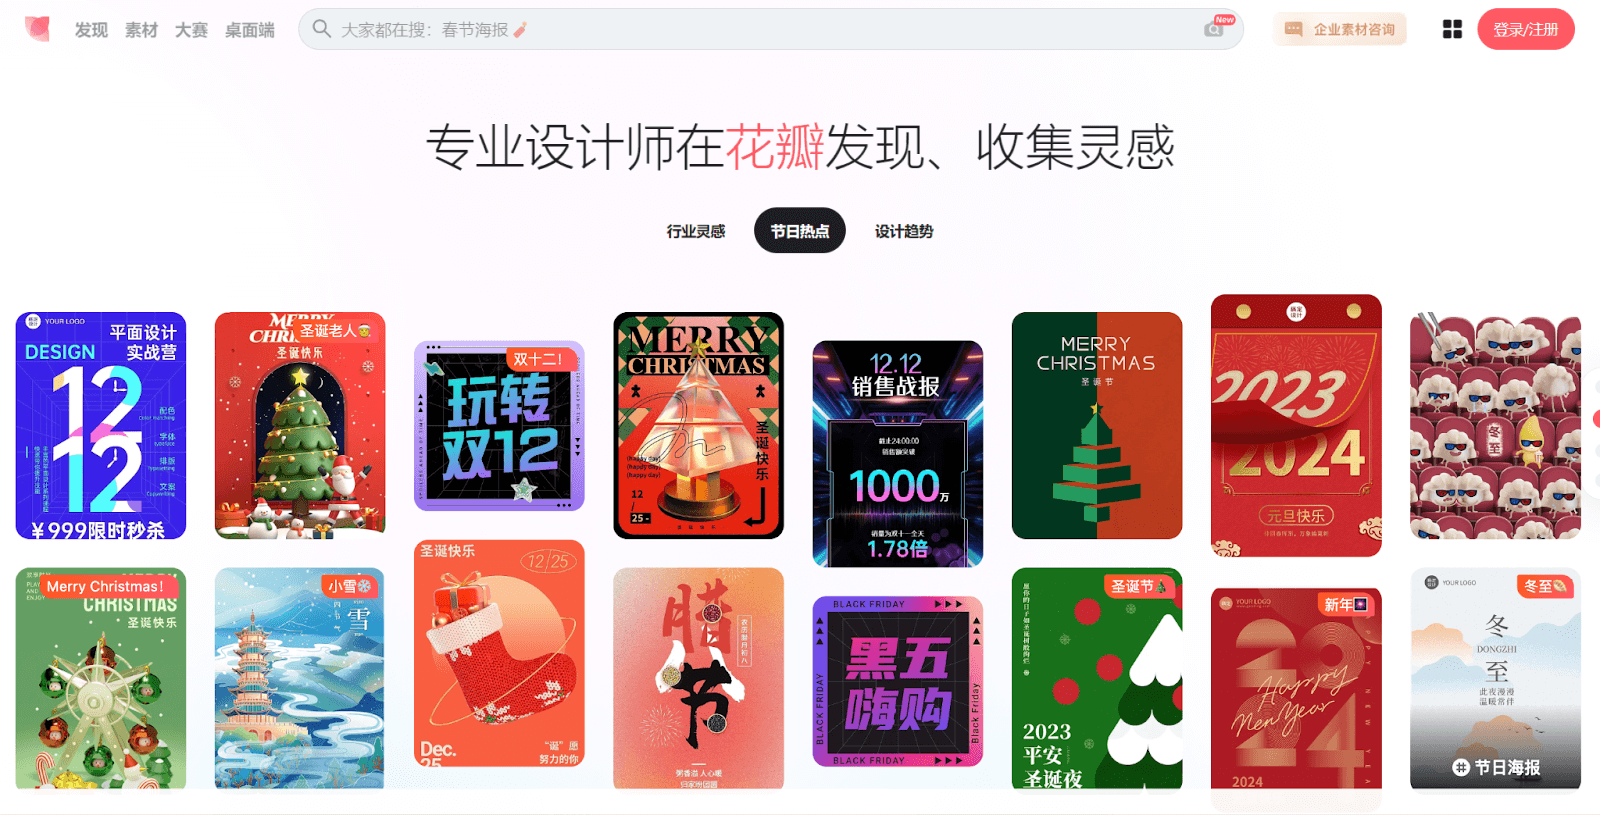 сайт Huaban - китайский аналог Pinterest